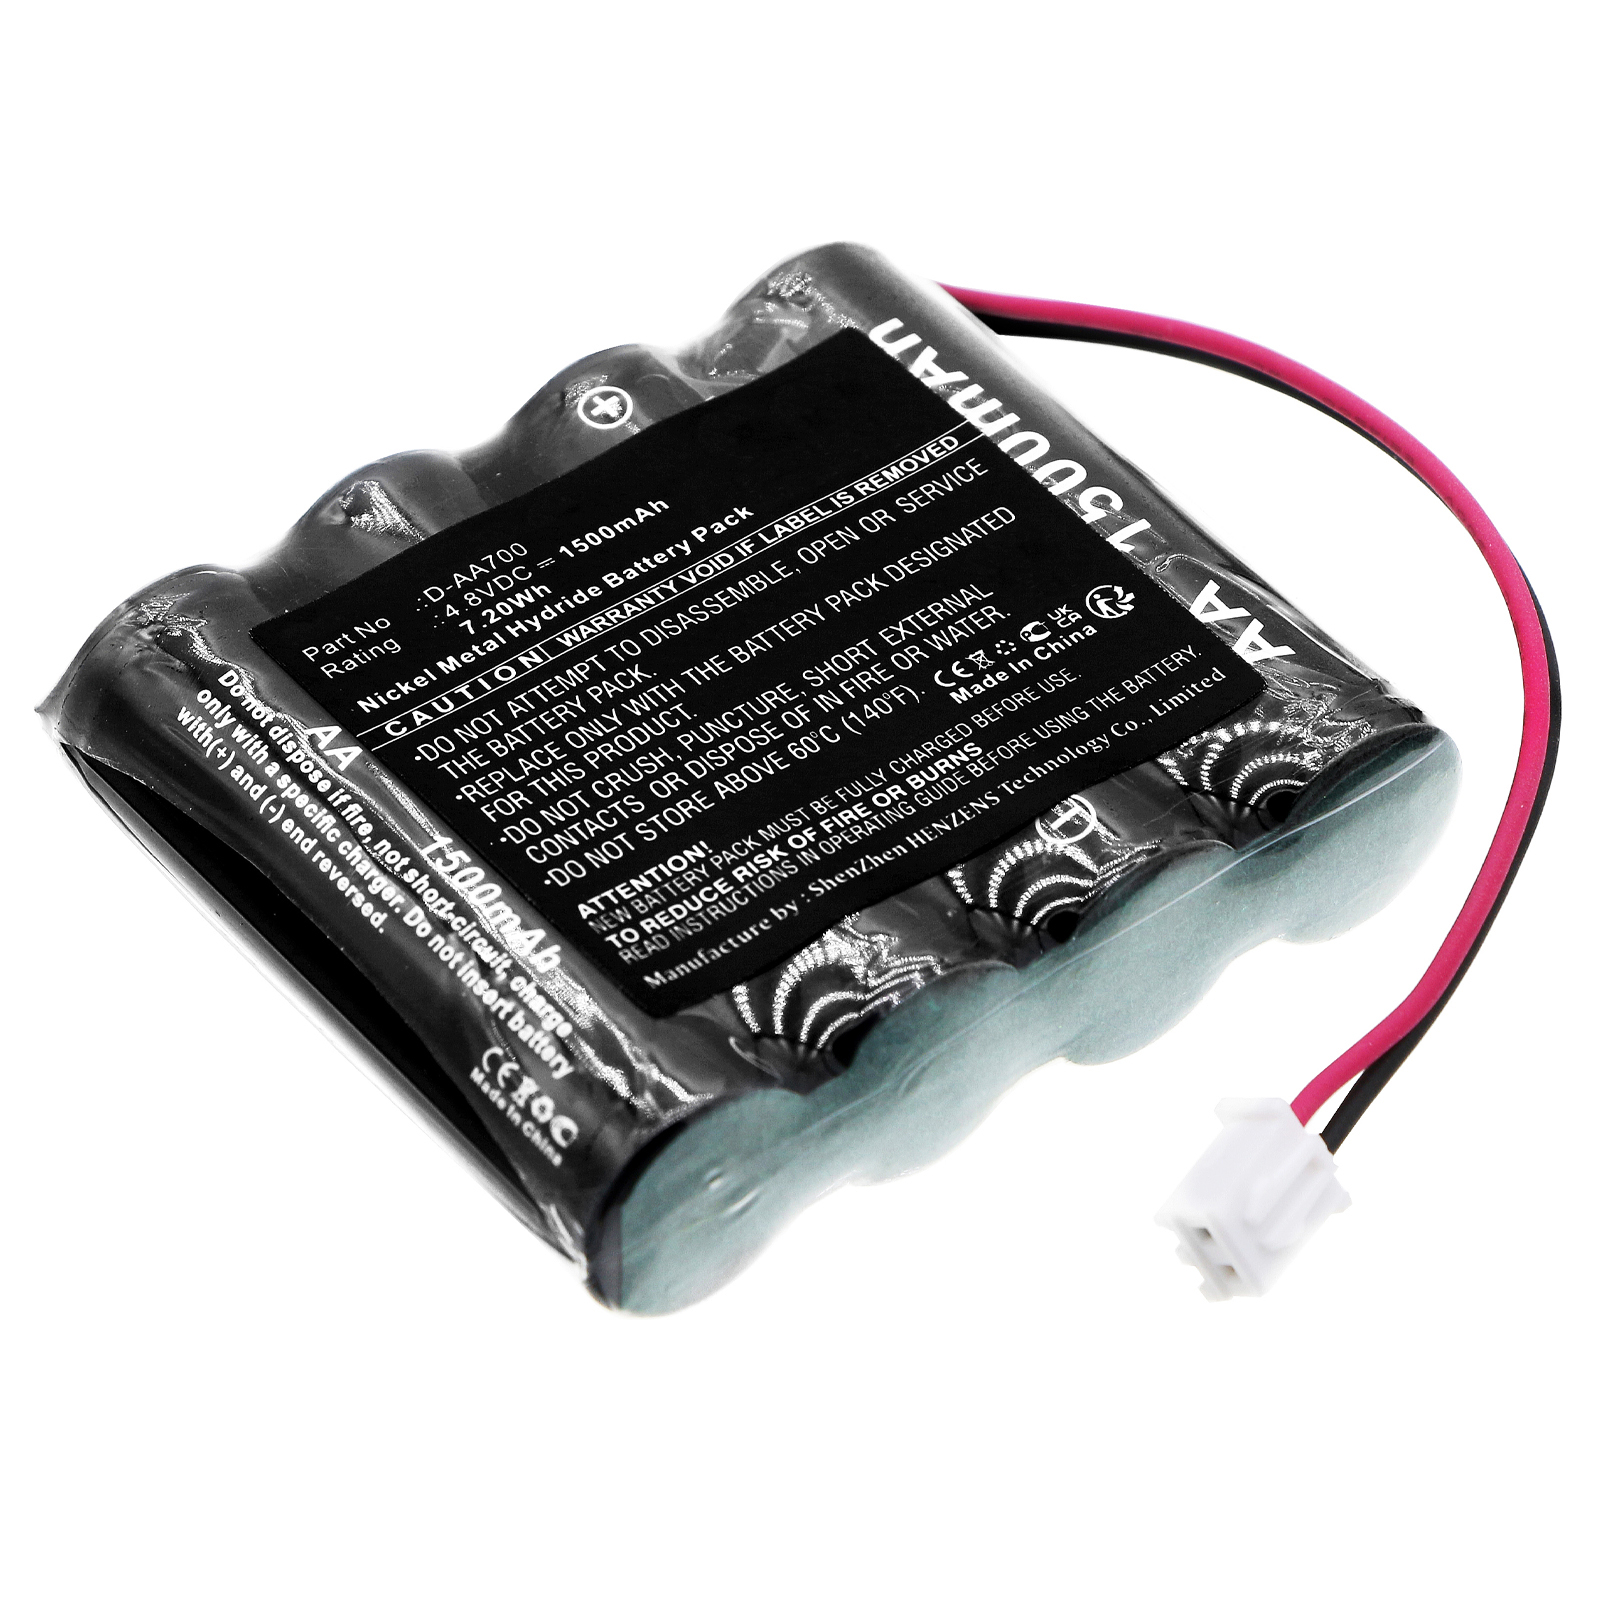 Synergy Digital Alarm System Battery, Compatible with GE D-AA700 Alarm System Battery (Ni-MH, 4.8V, 1500mAh)